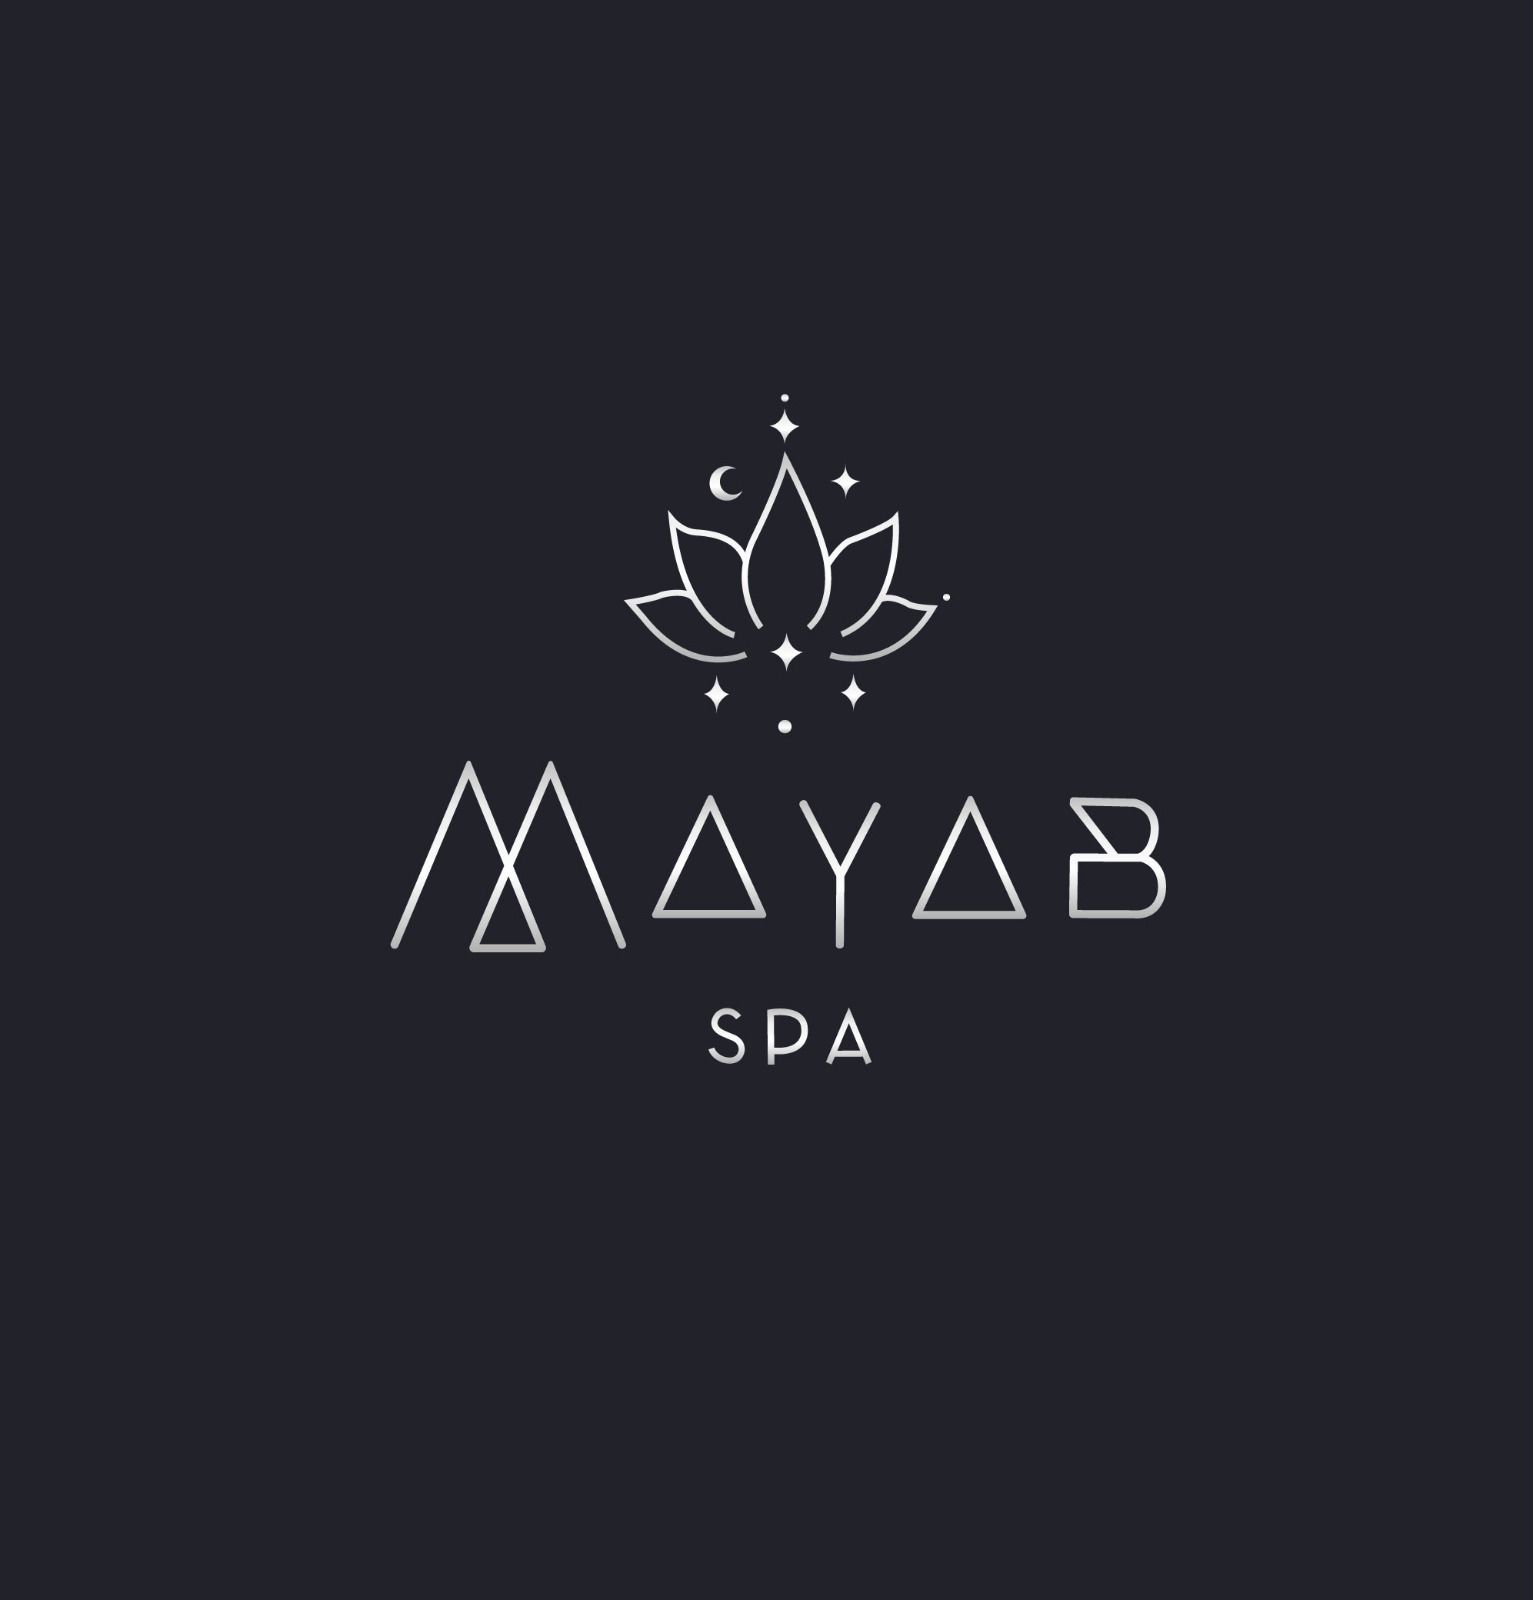 Mayab spa